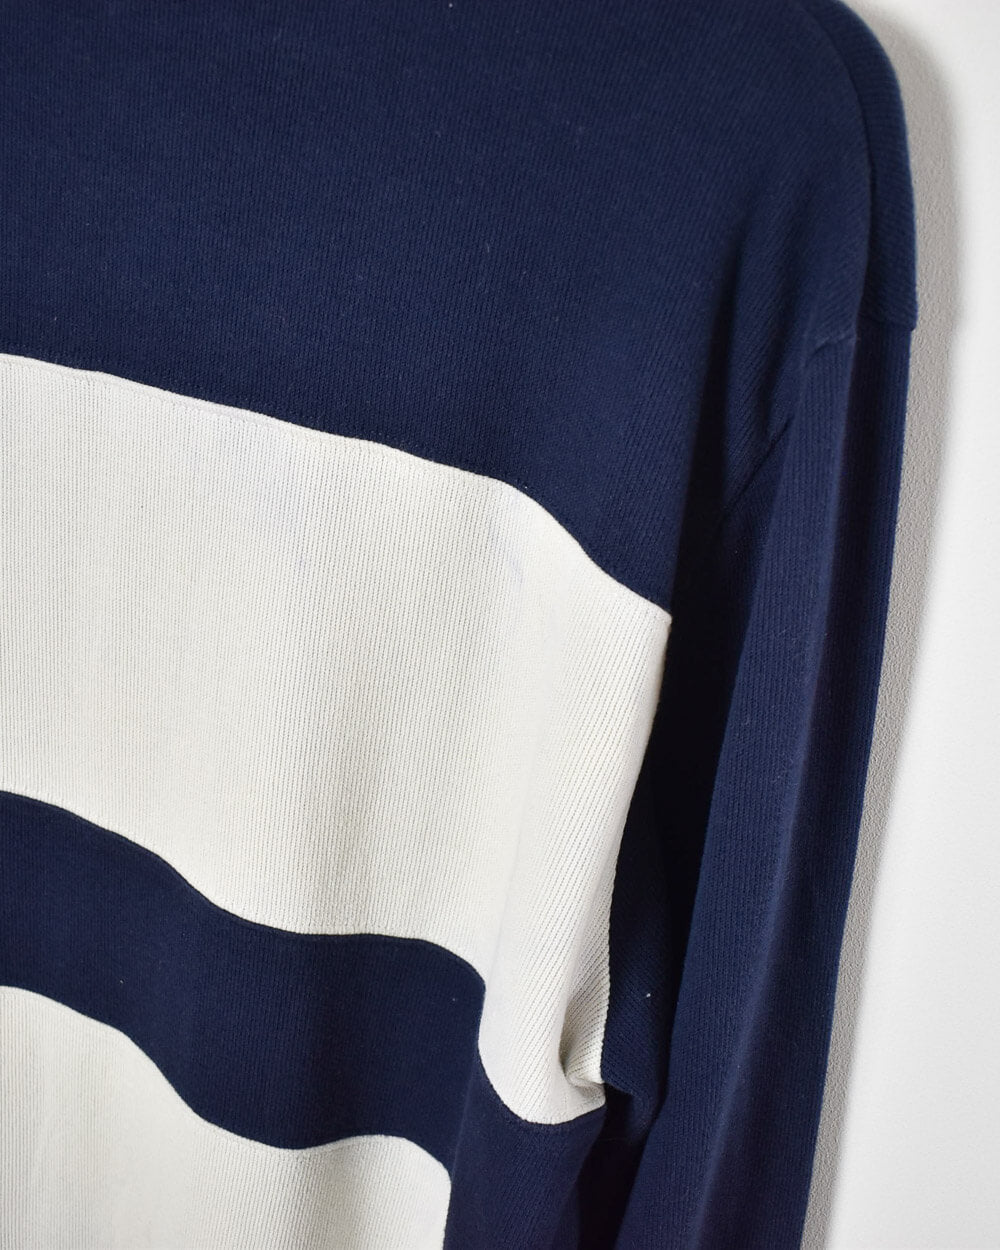 Yves Saint Laurent Zip-Through Sweatshirt - Large - Domno Vintage 90s, 80s, 00s Retro and Vintage Clothing 